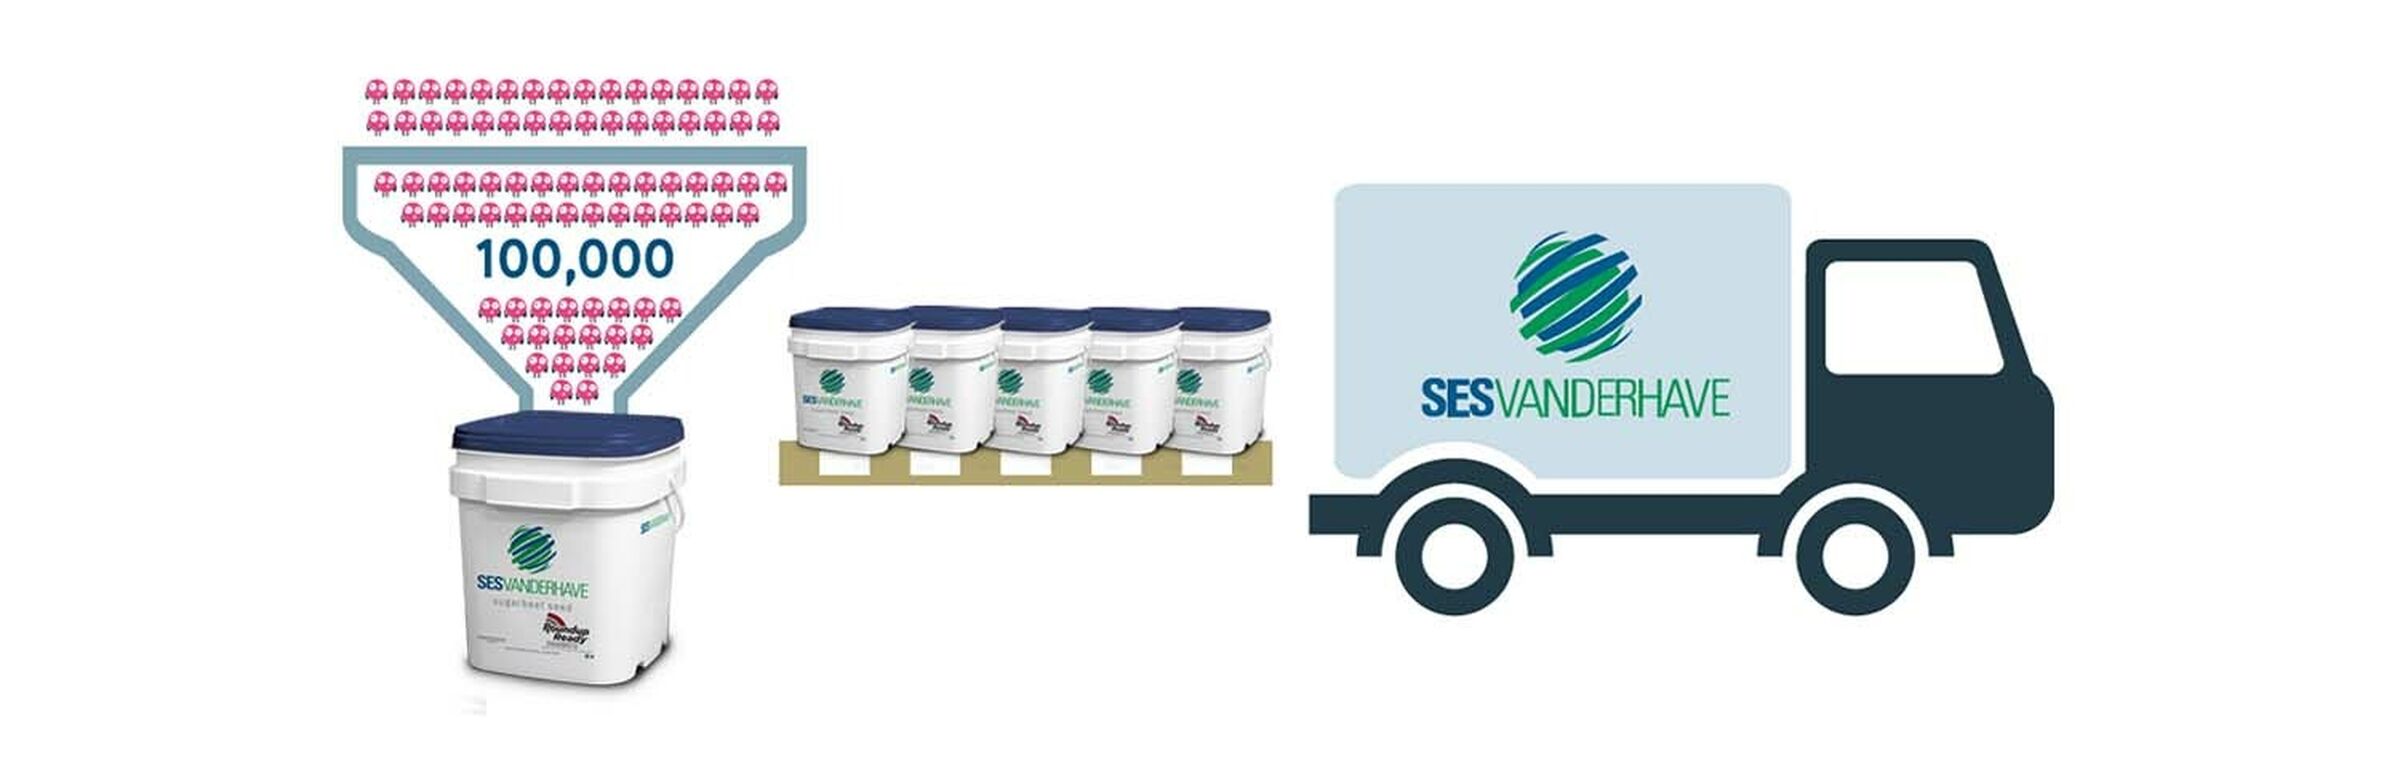 Sesvanderhave usa seed processing packaging